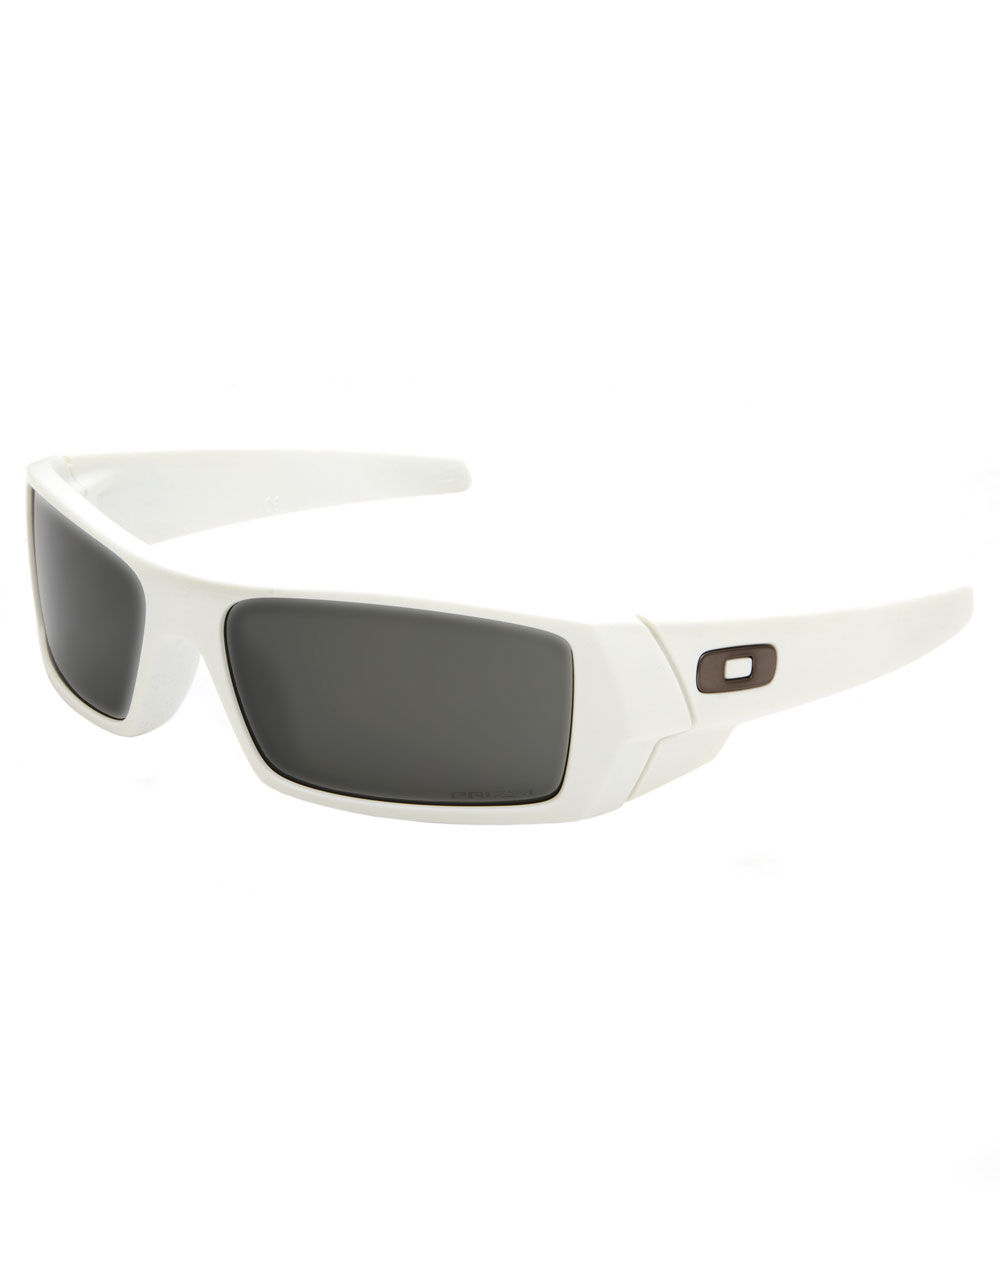 OAKLEY Gascan Matte White Sunglasses - MATTE WHITE/PRIZM BLACK | Tillys